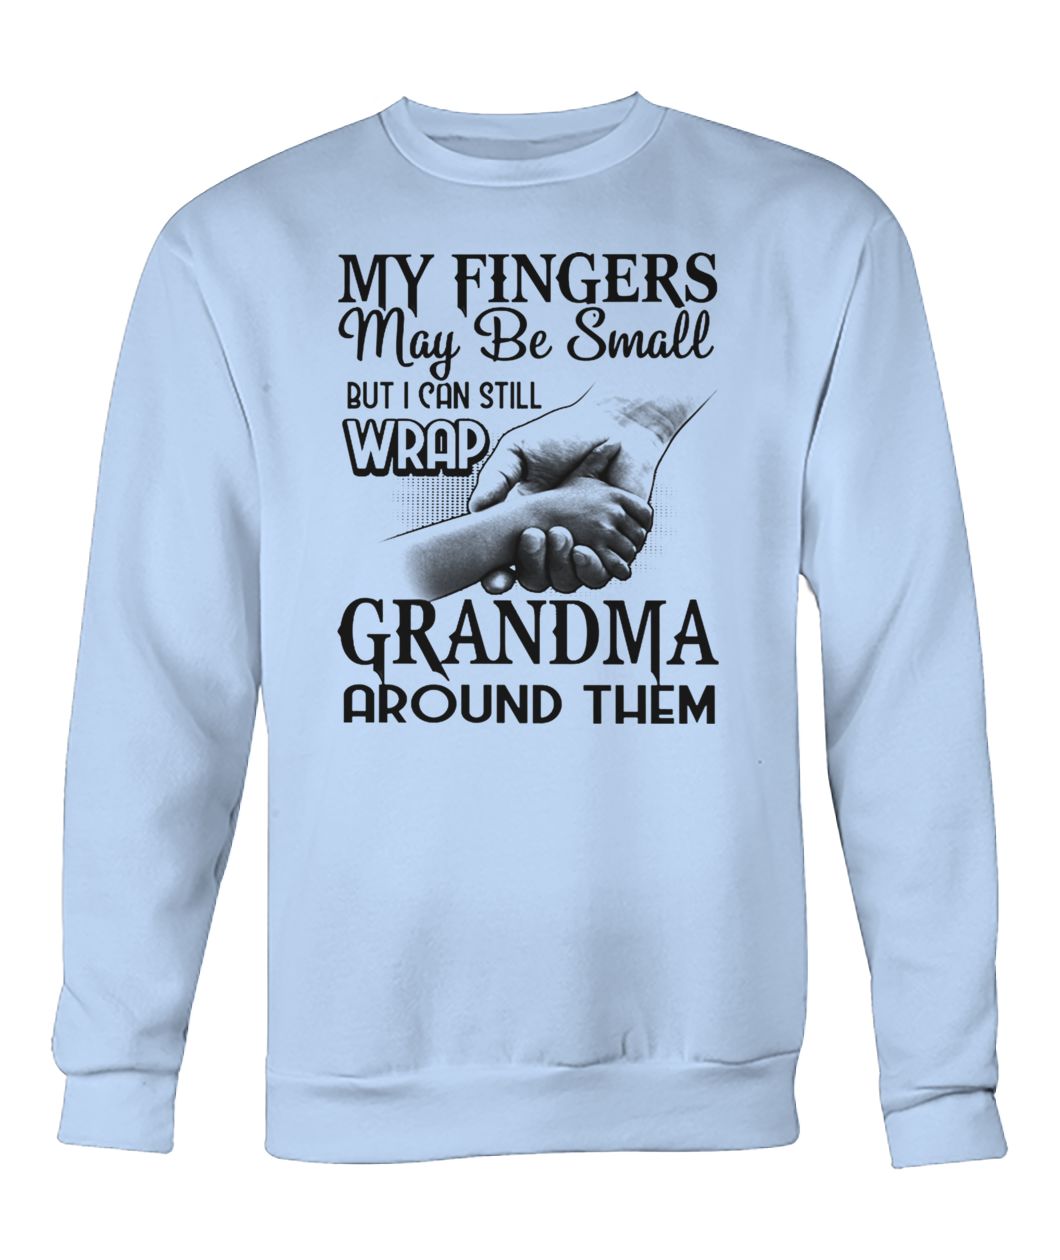 My fingers may be small but I can still wrap grandma around them crew neck sweatshirt